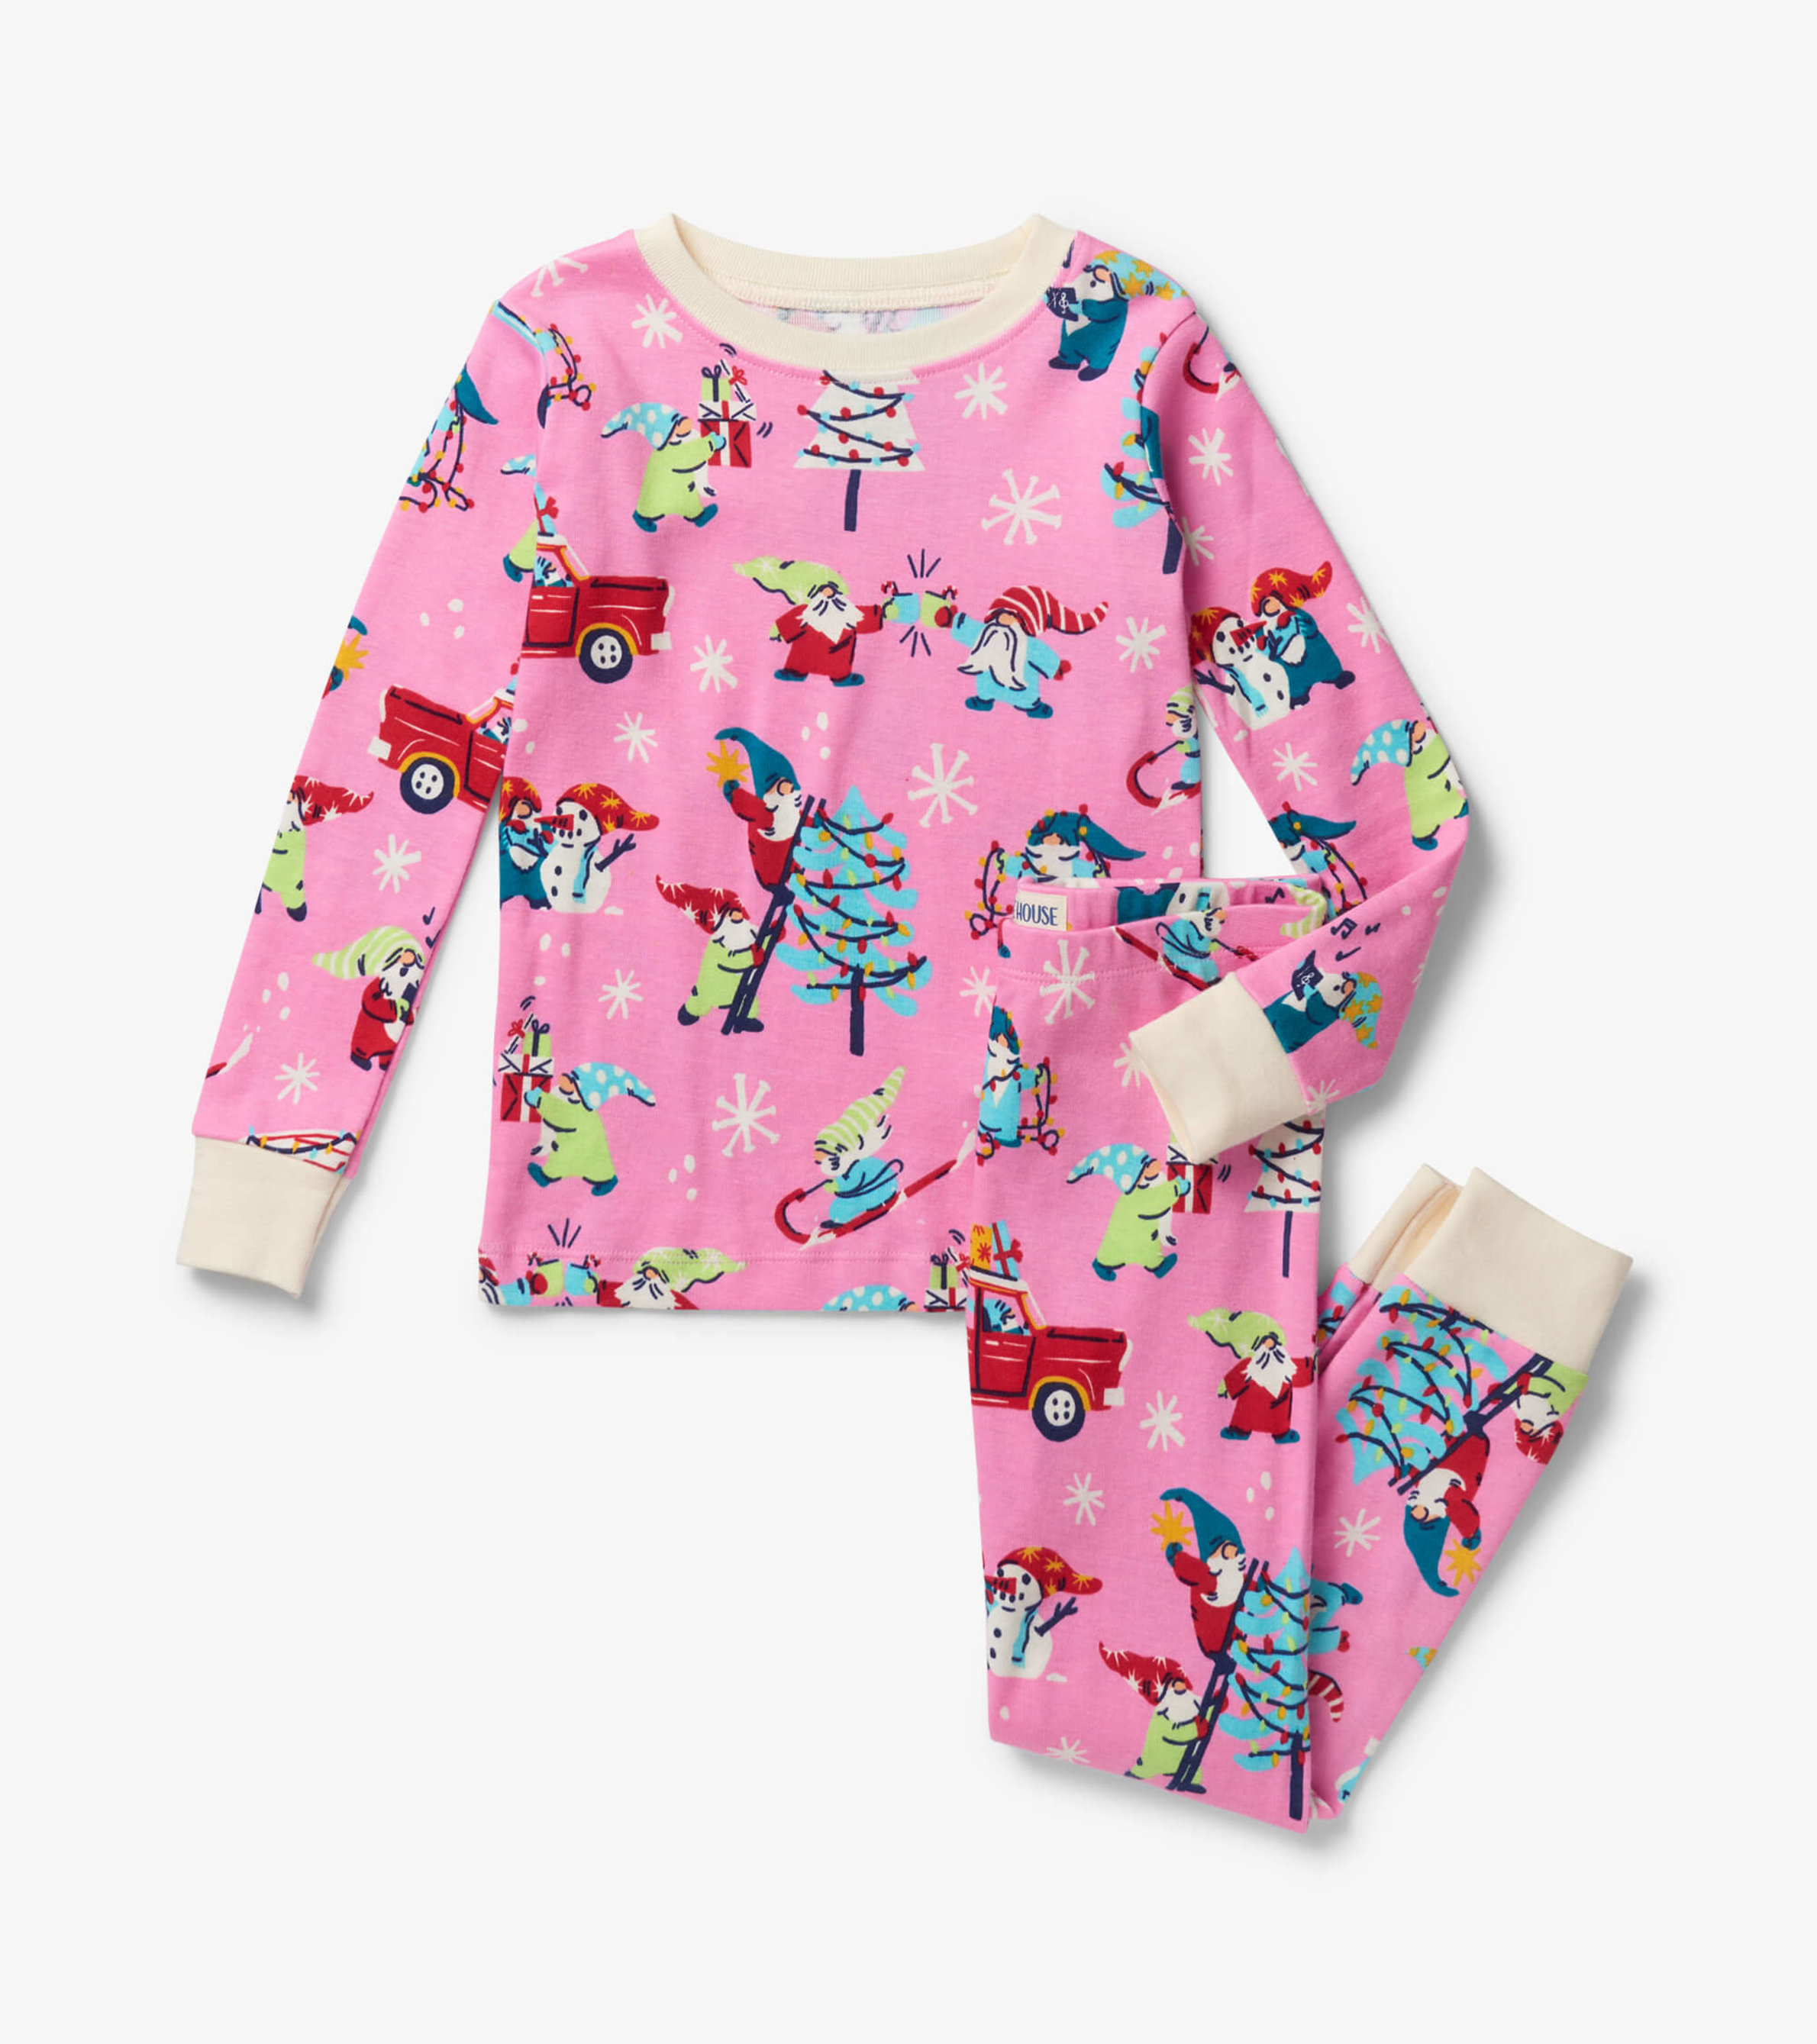 Christmas Moose Family Matching Outfit Pajamas Sets Adult Kid Home